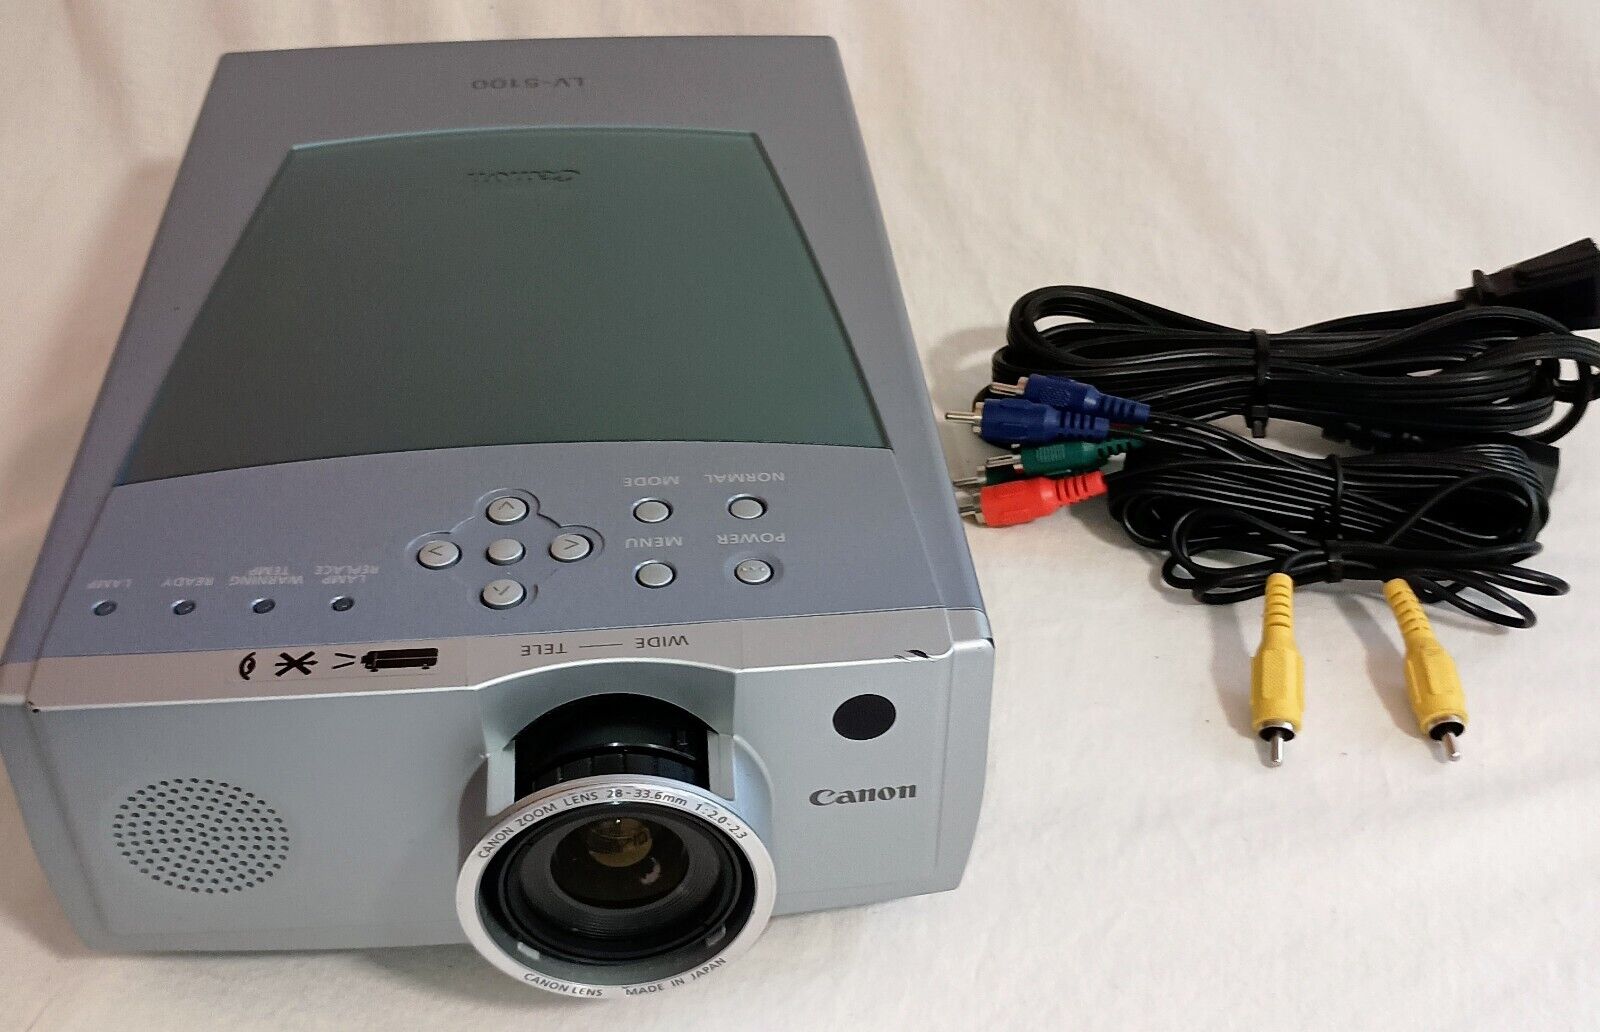 Canon LV-5110U Portable Projector W/ SVGA Power Cords 800x600 Tested